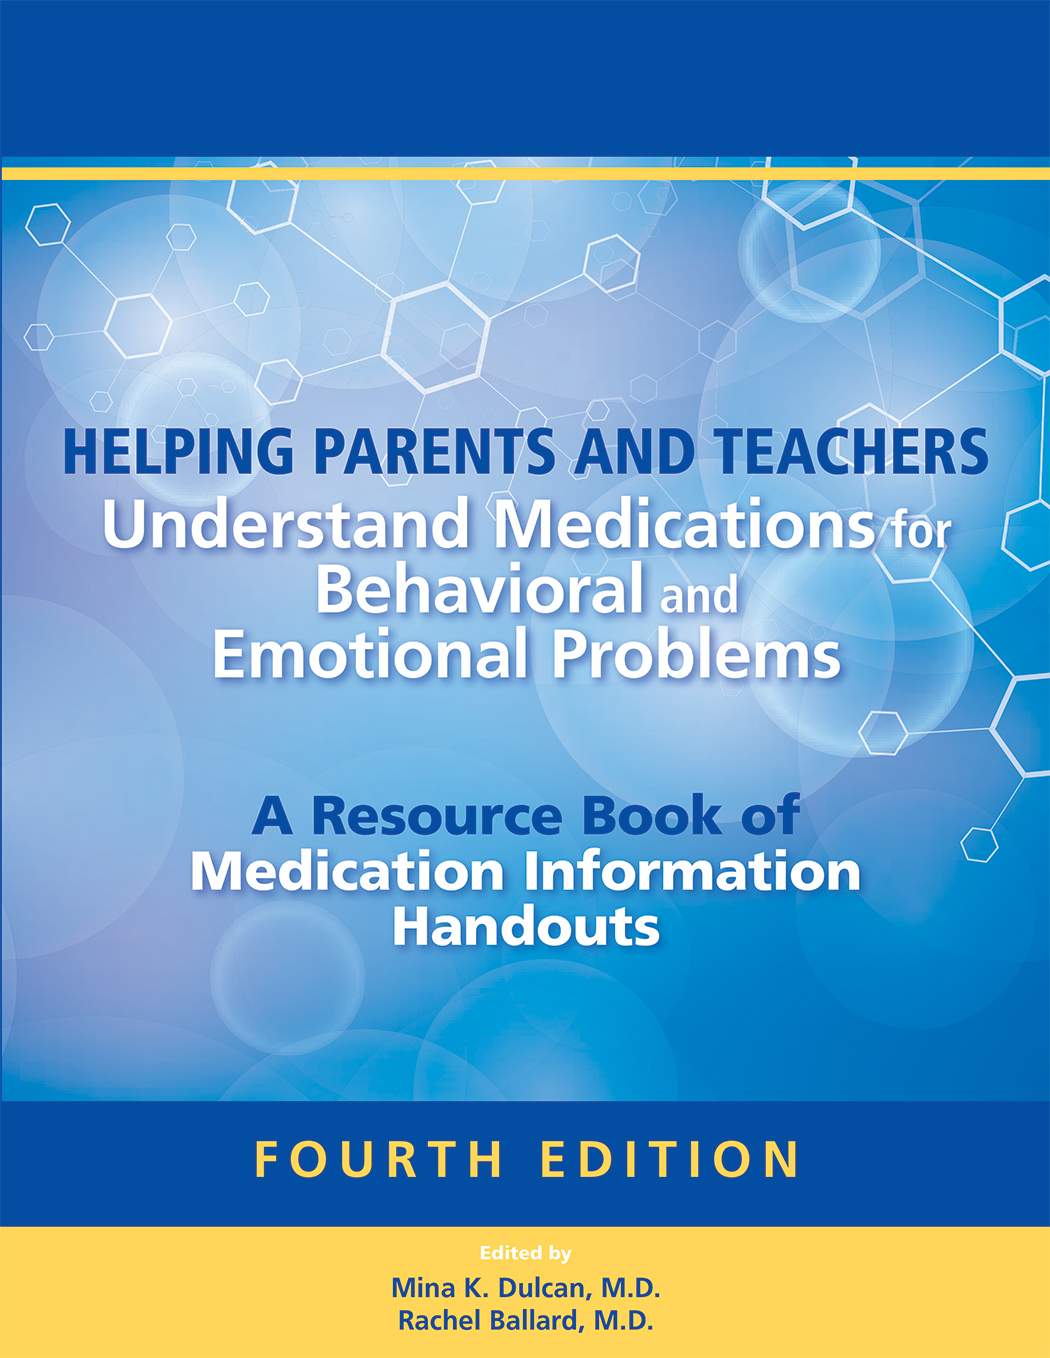 Patient Education cover image